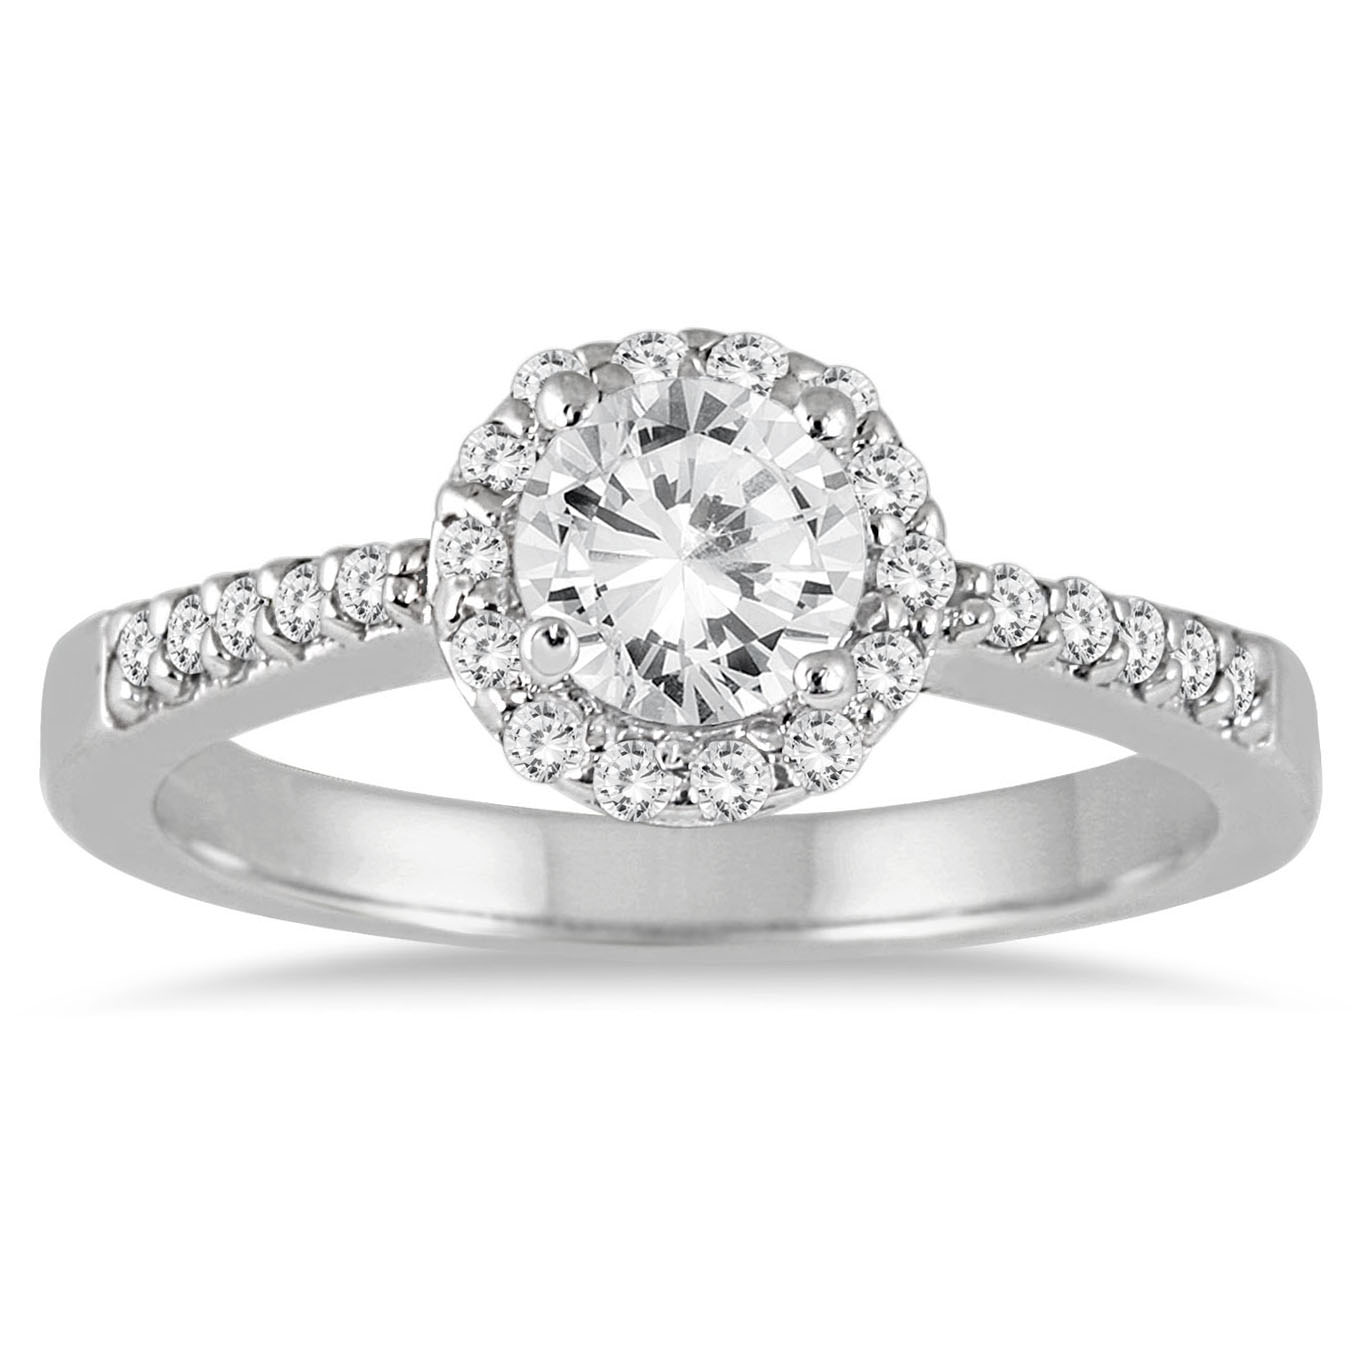 3/4 Carat TW Halo Diamond Engagement Ring in 14K White Gold